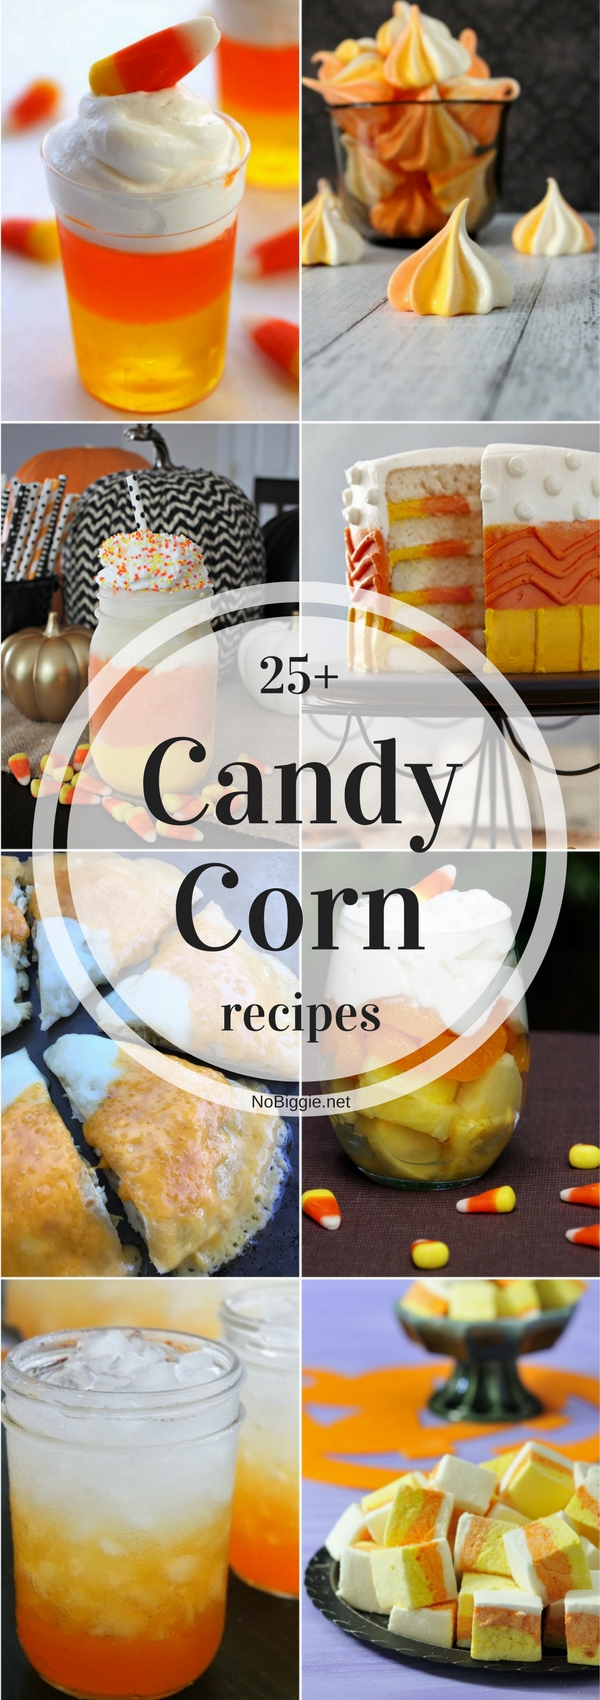 25+ Candy Corn Recipes | NoBiggie.net